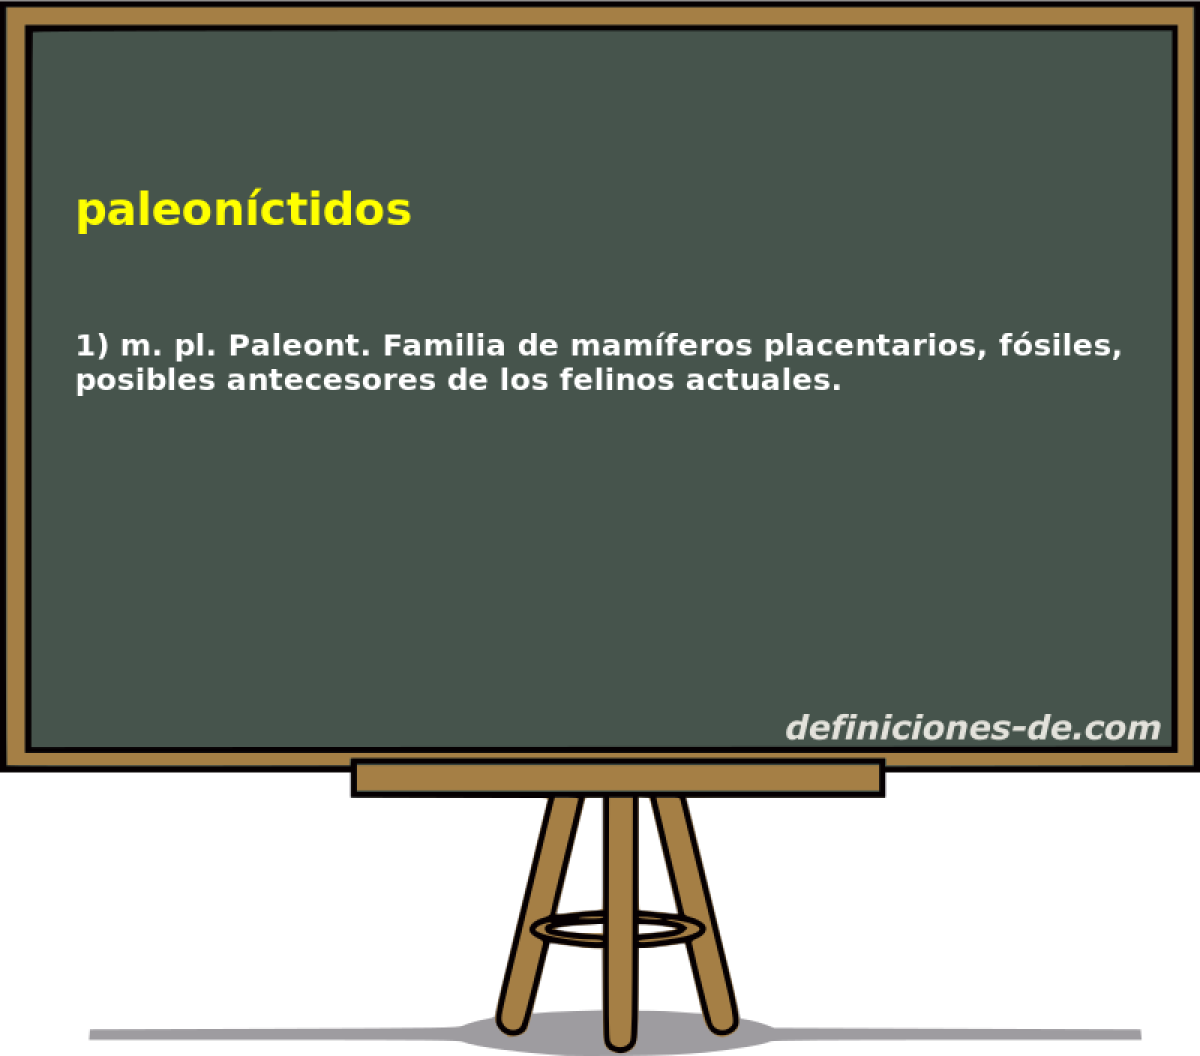 paleonctidos 